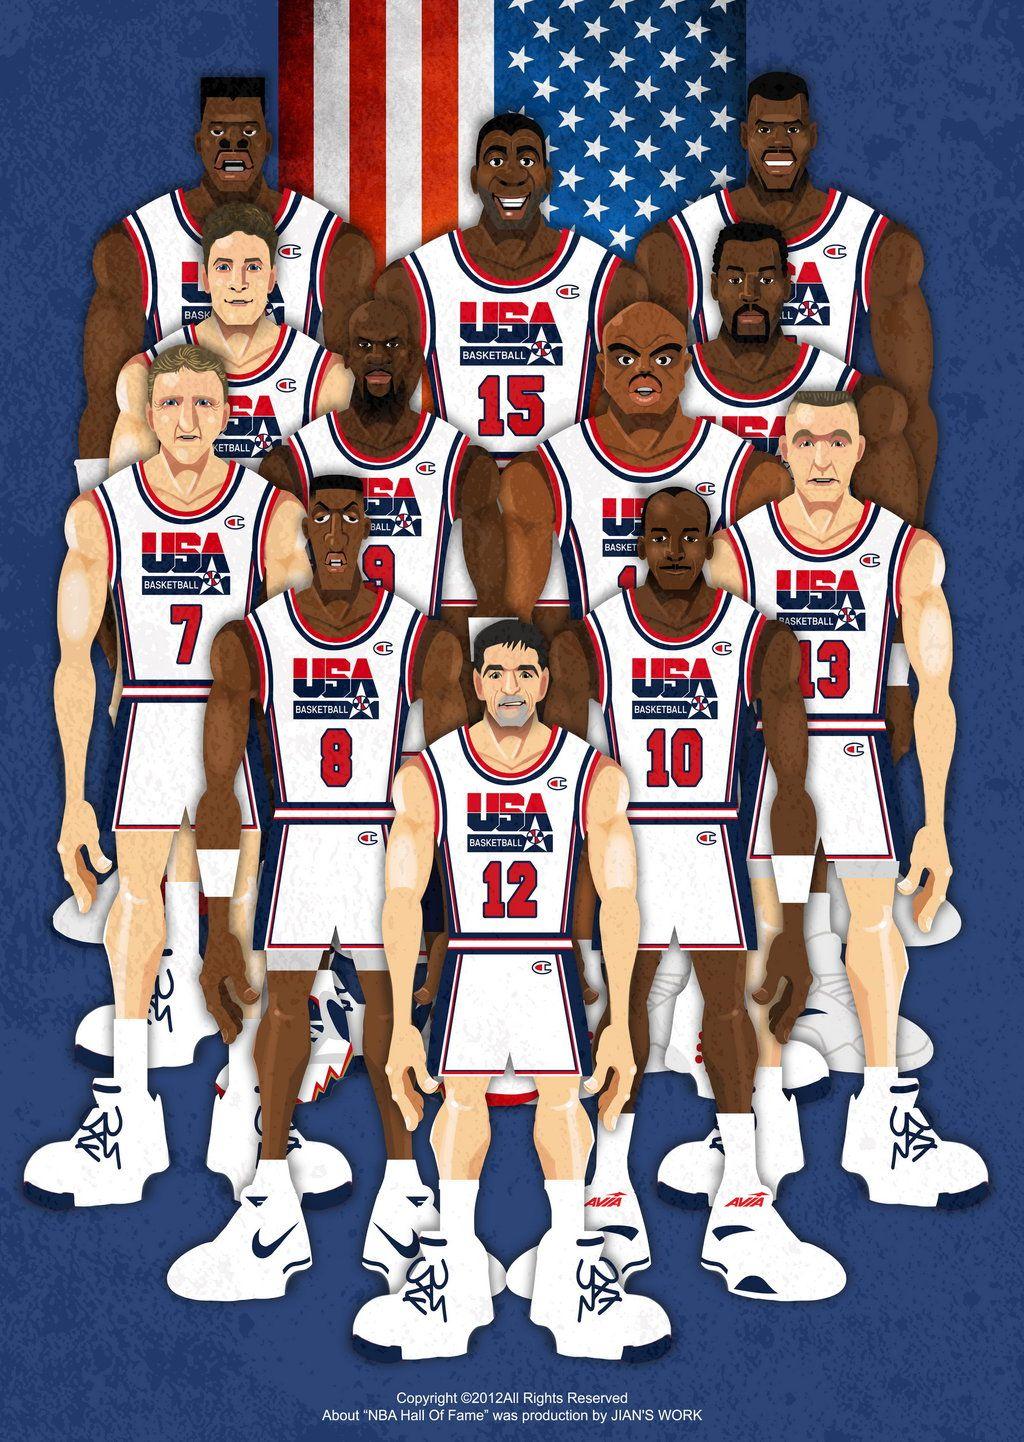 1992 dream team roster